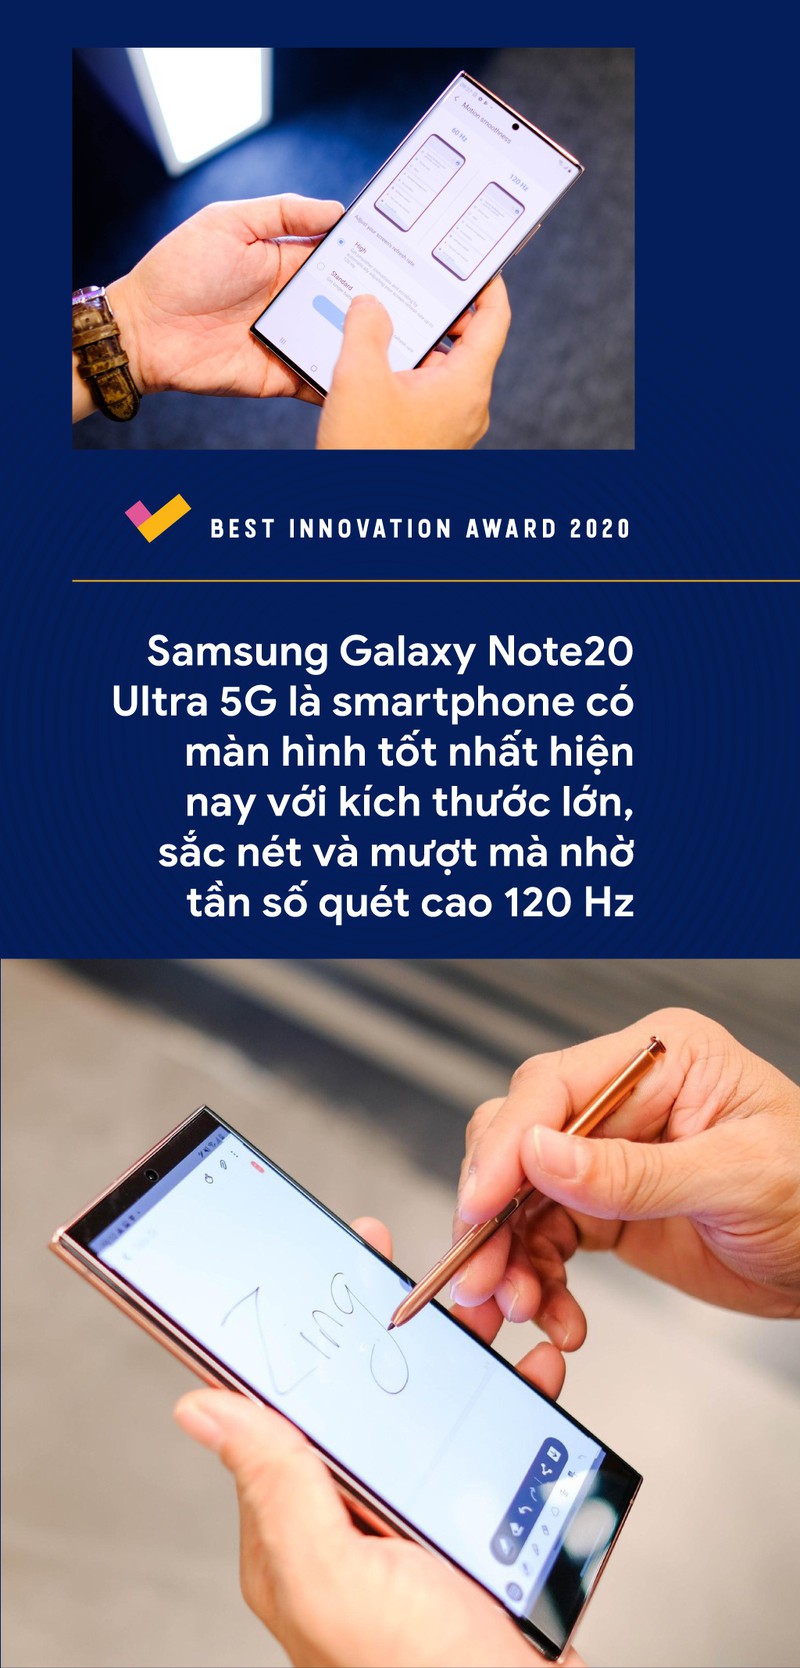 Galaxy Note20 Ultra 5G duoc binh chon la chiec smartphone tan tien nhat-Hinh-5